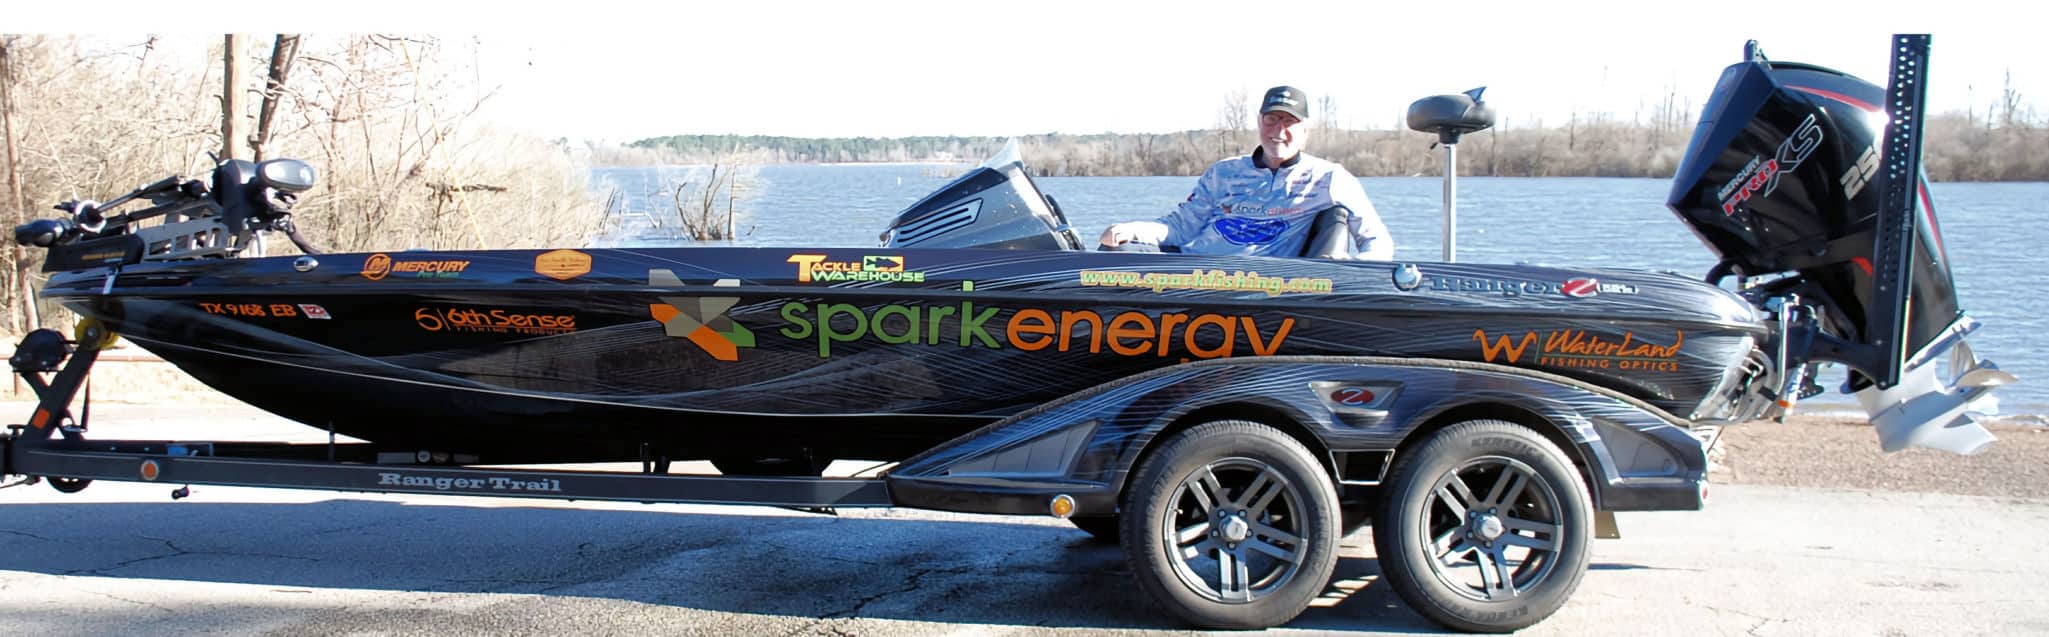 Spark Energy Boat